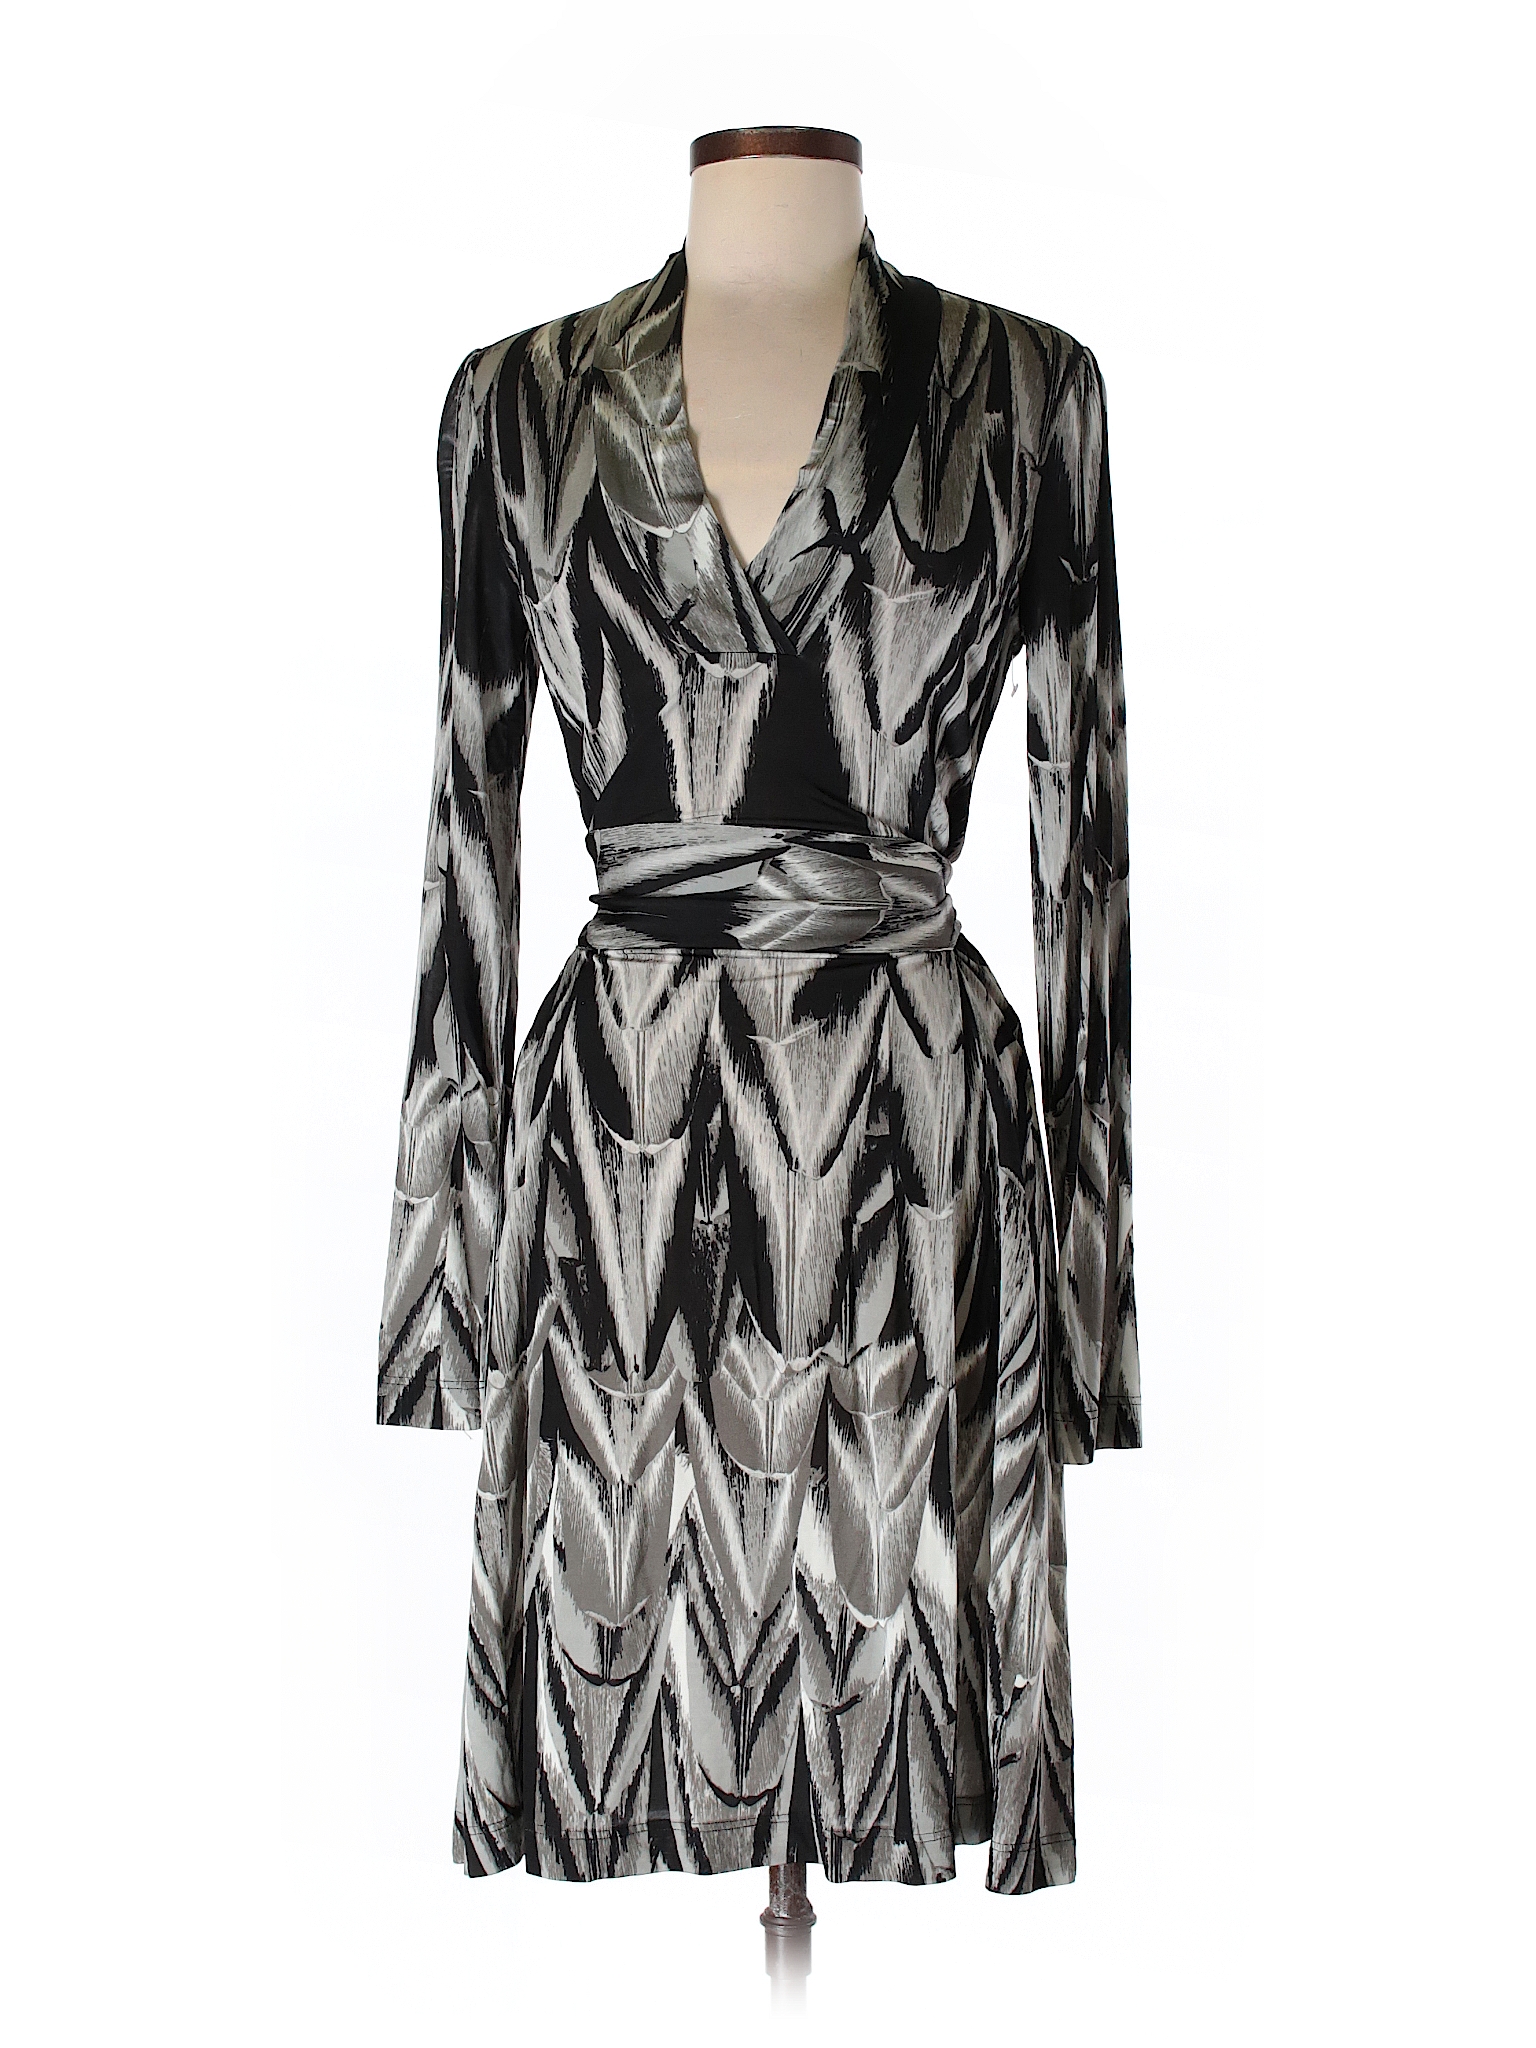 Escada Sport Print Gray Casual Dress Size 36 (EU) - 88% off | thredUP